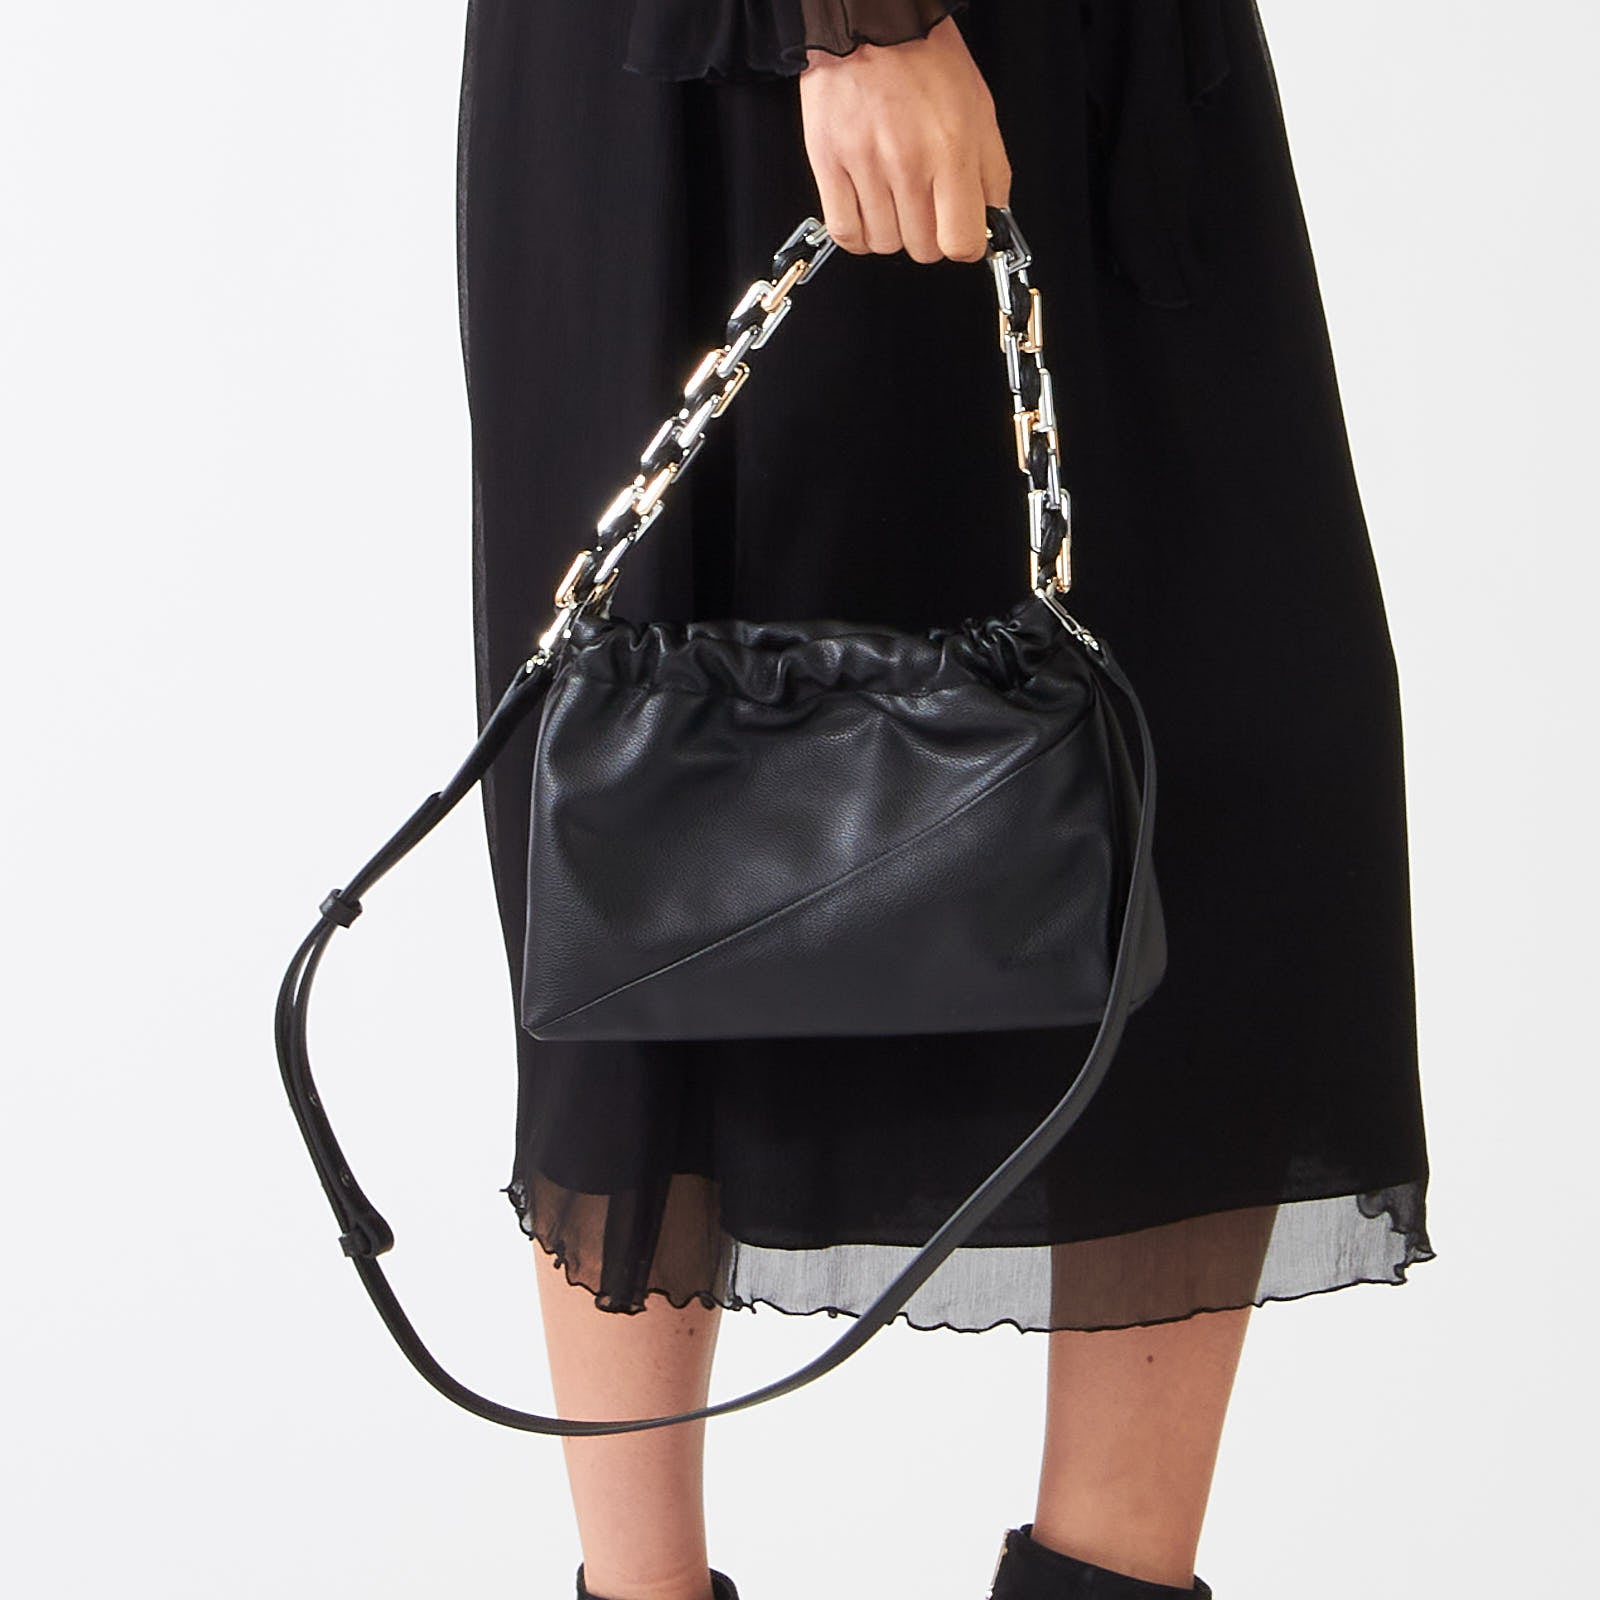 Black Chain Strap Handbag